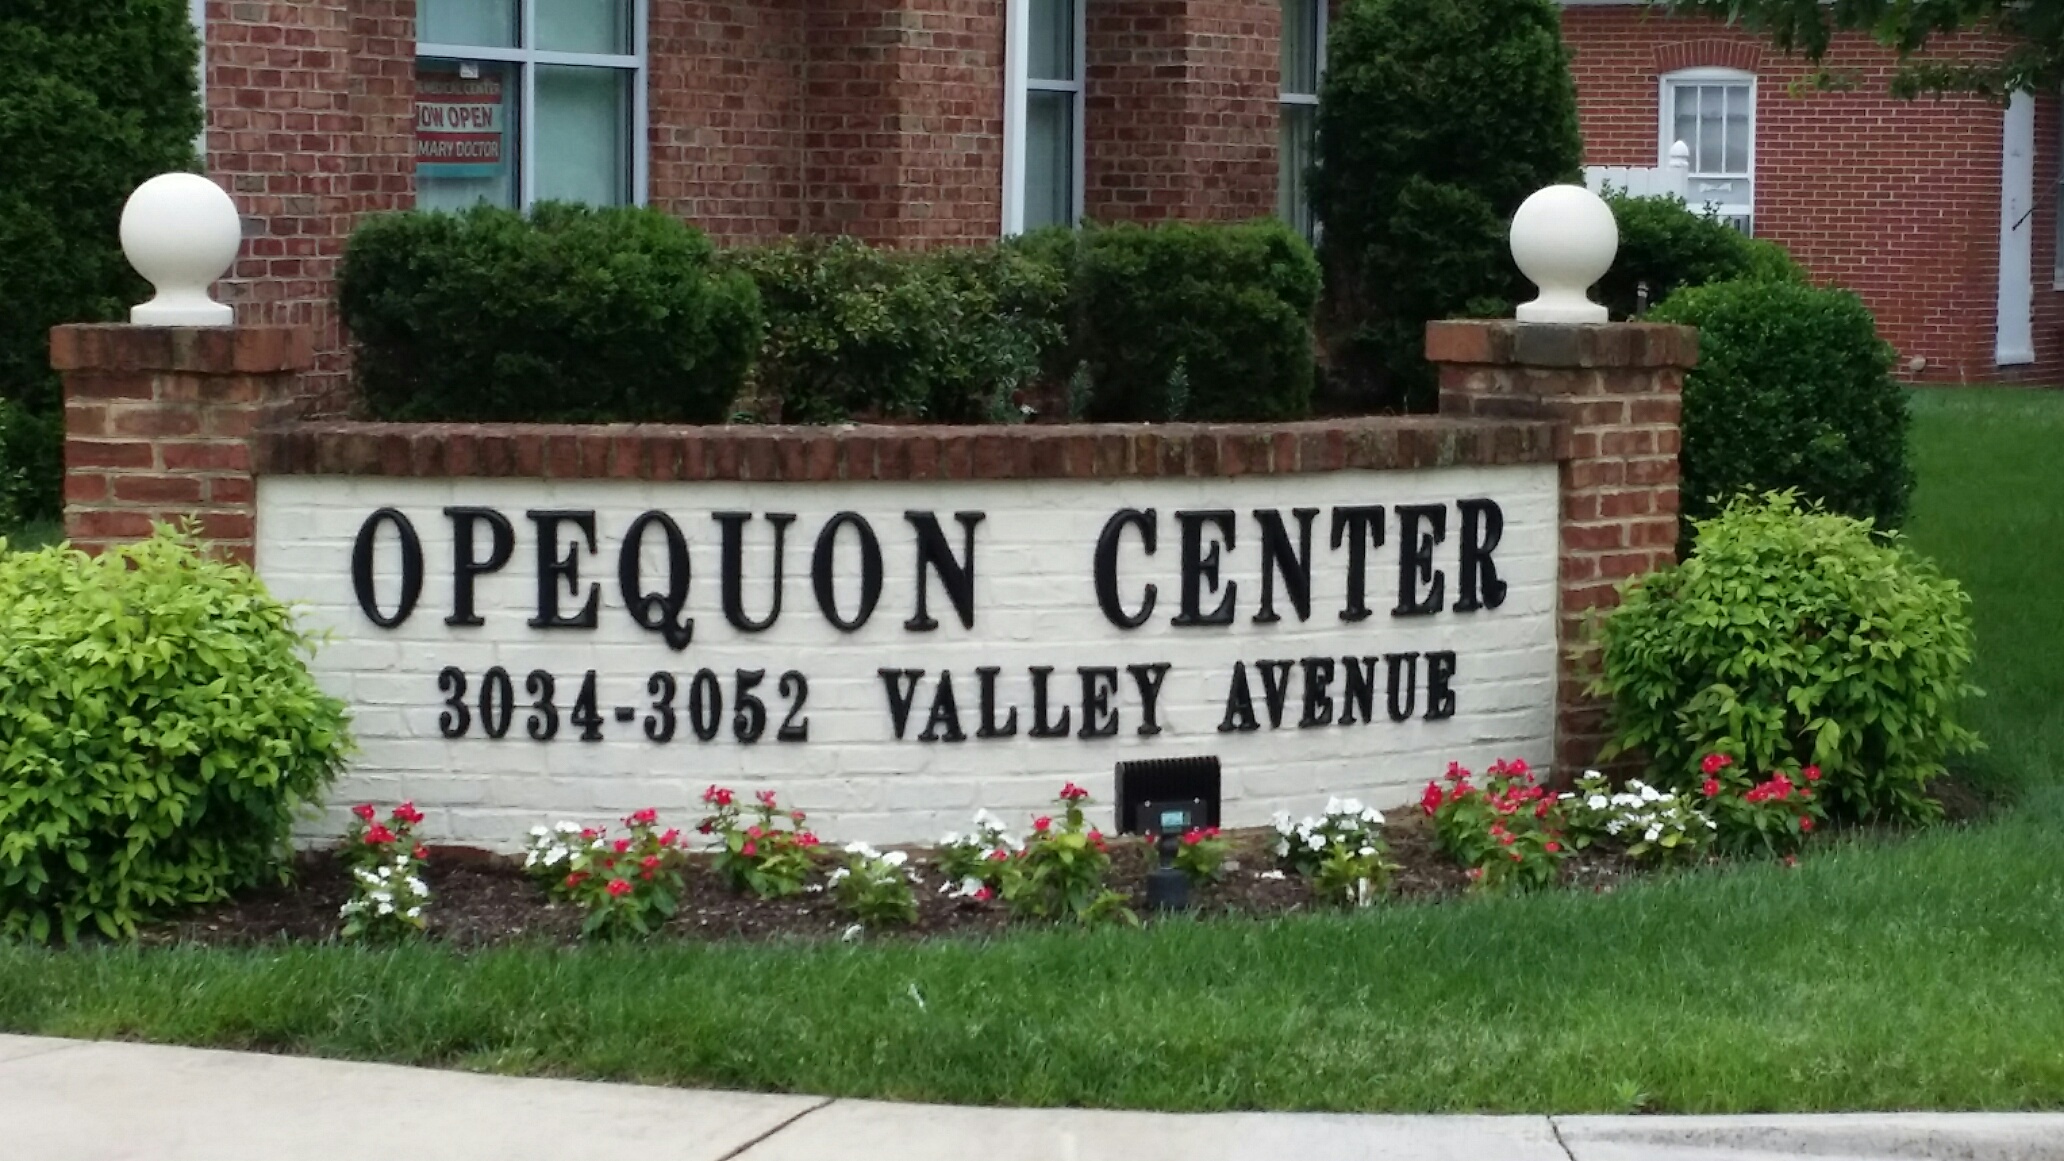 Opequon Center